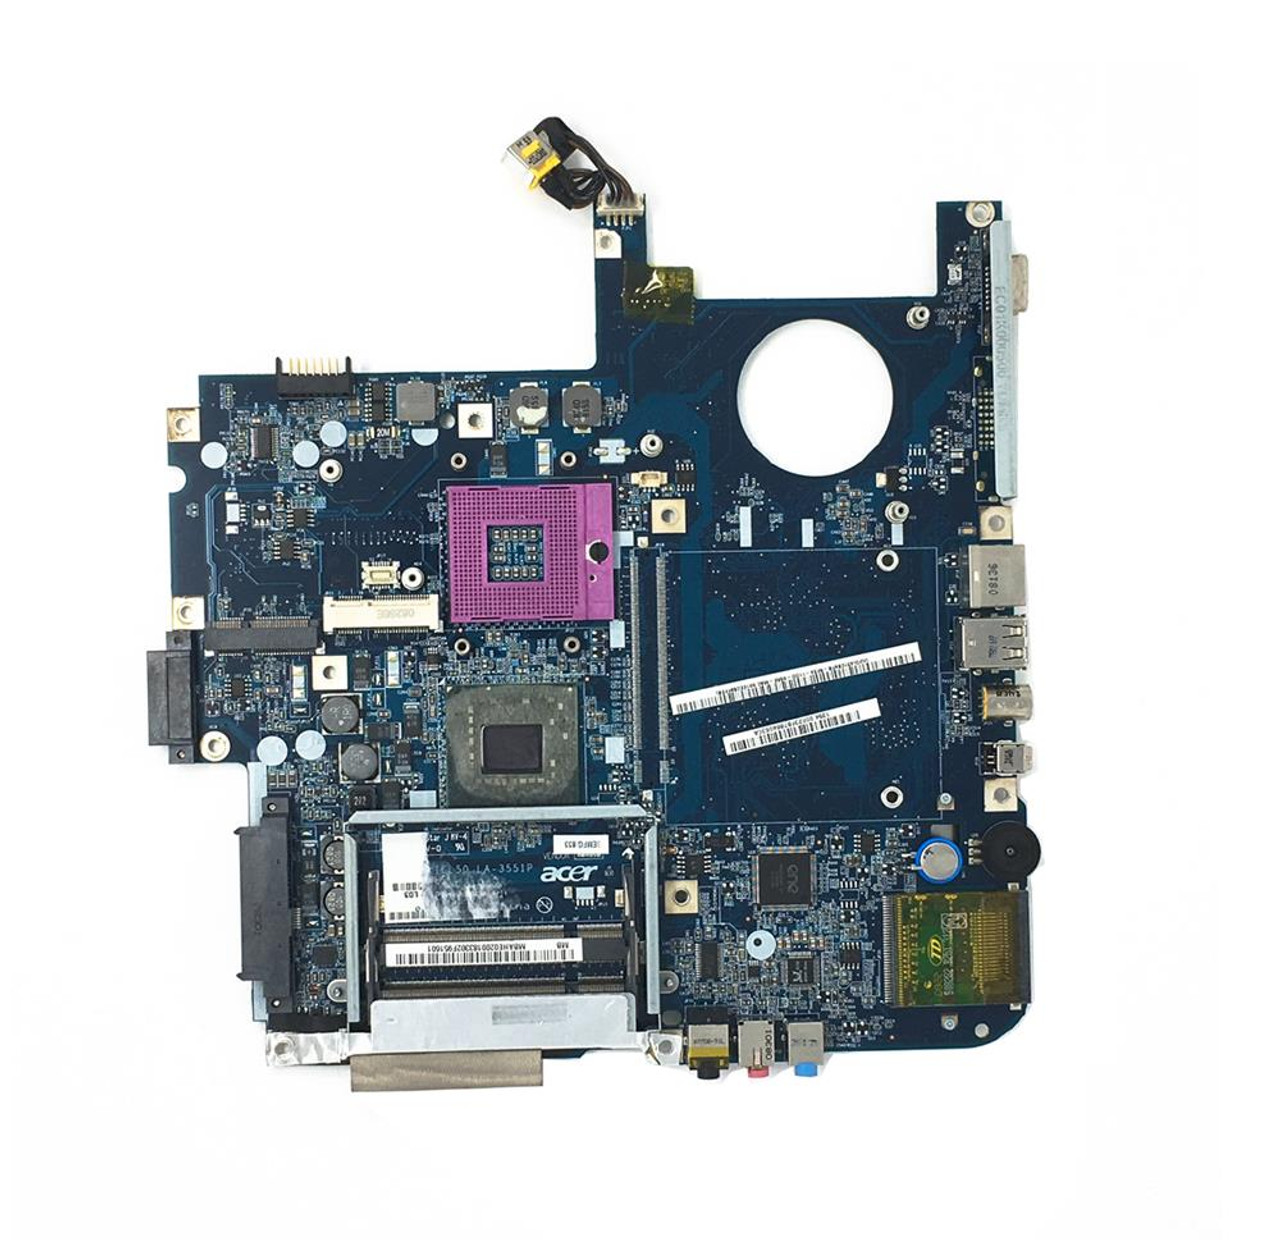 ICL50LA-3551P Acer System Board (Motherboard) for Aspire 5315 5720 (Refurbished)